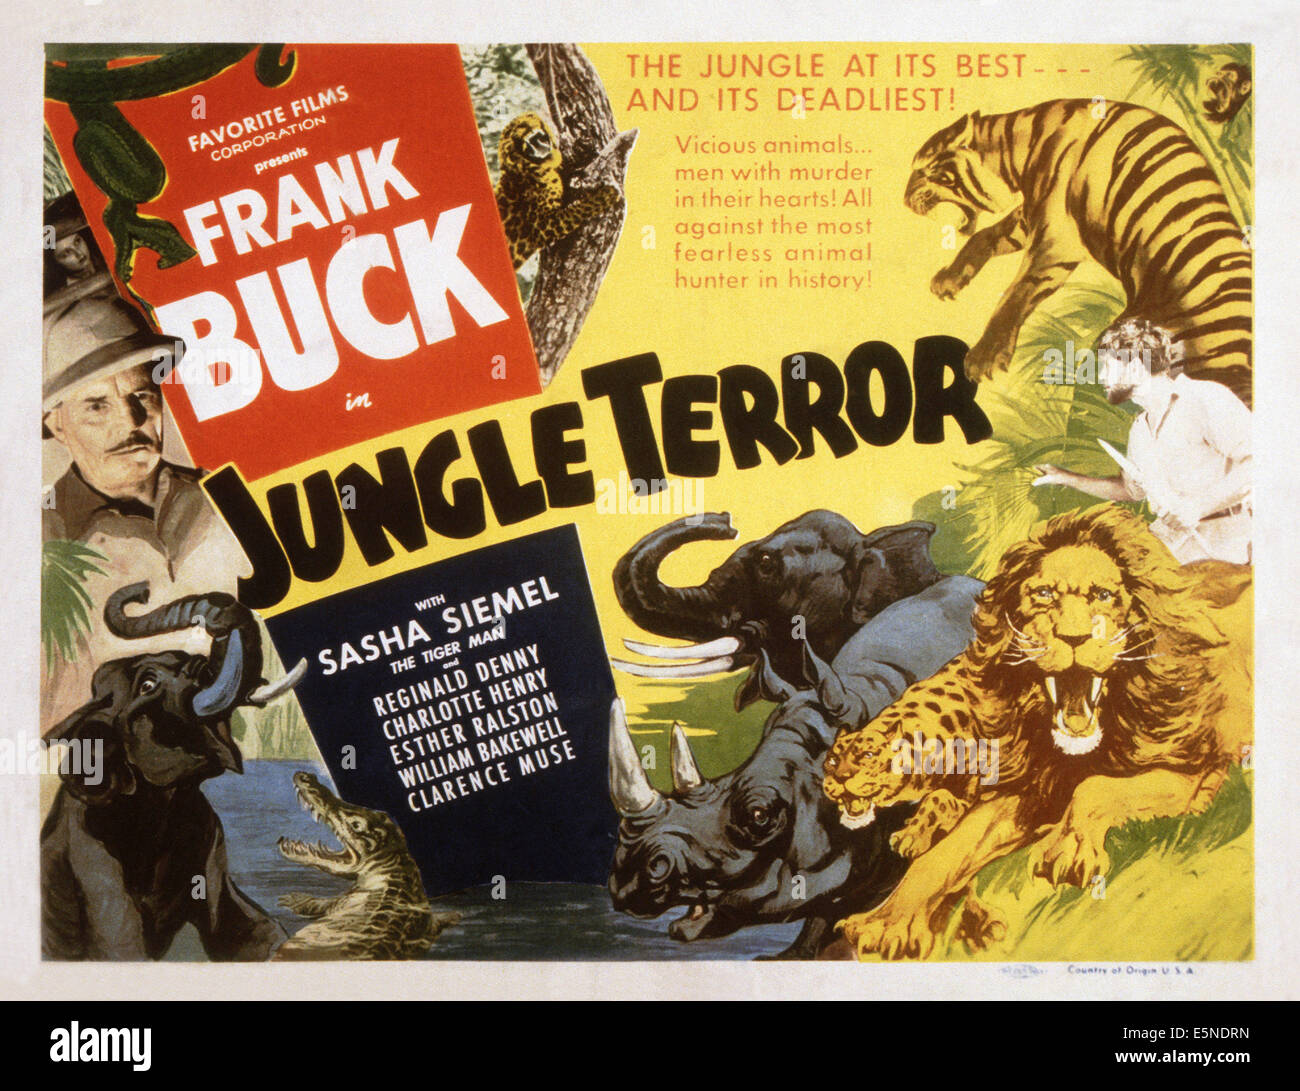 JUNGLE TERROR, Frank Buck (left), 1946 Stock Photo